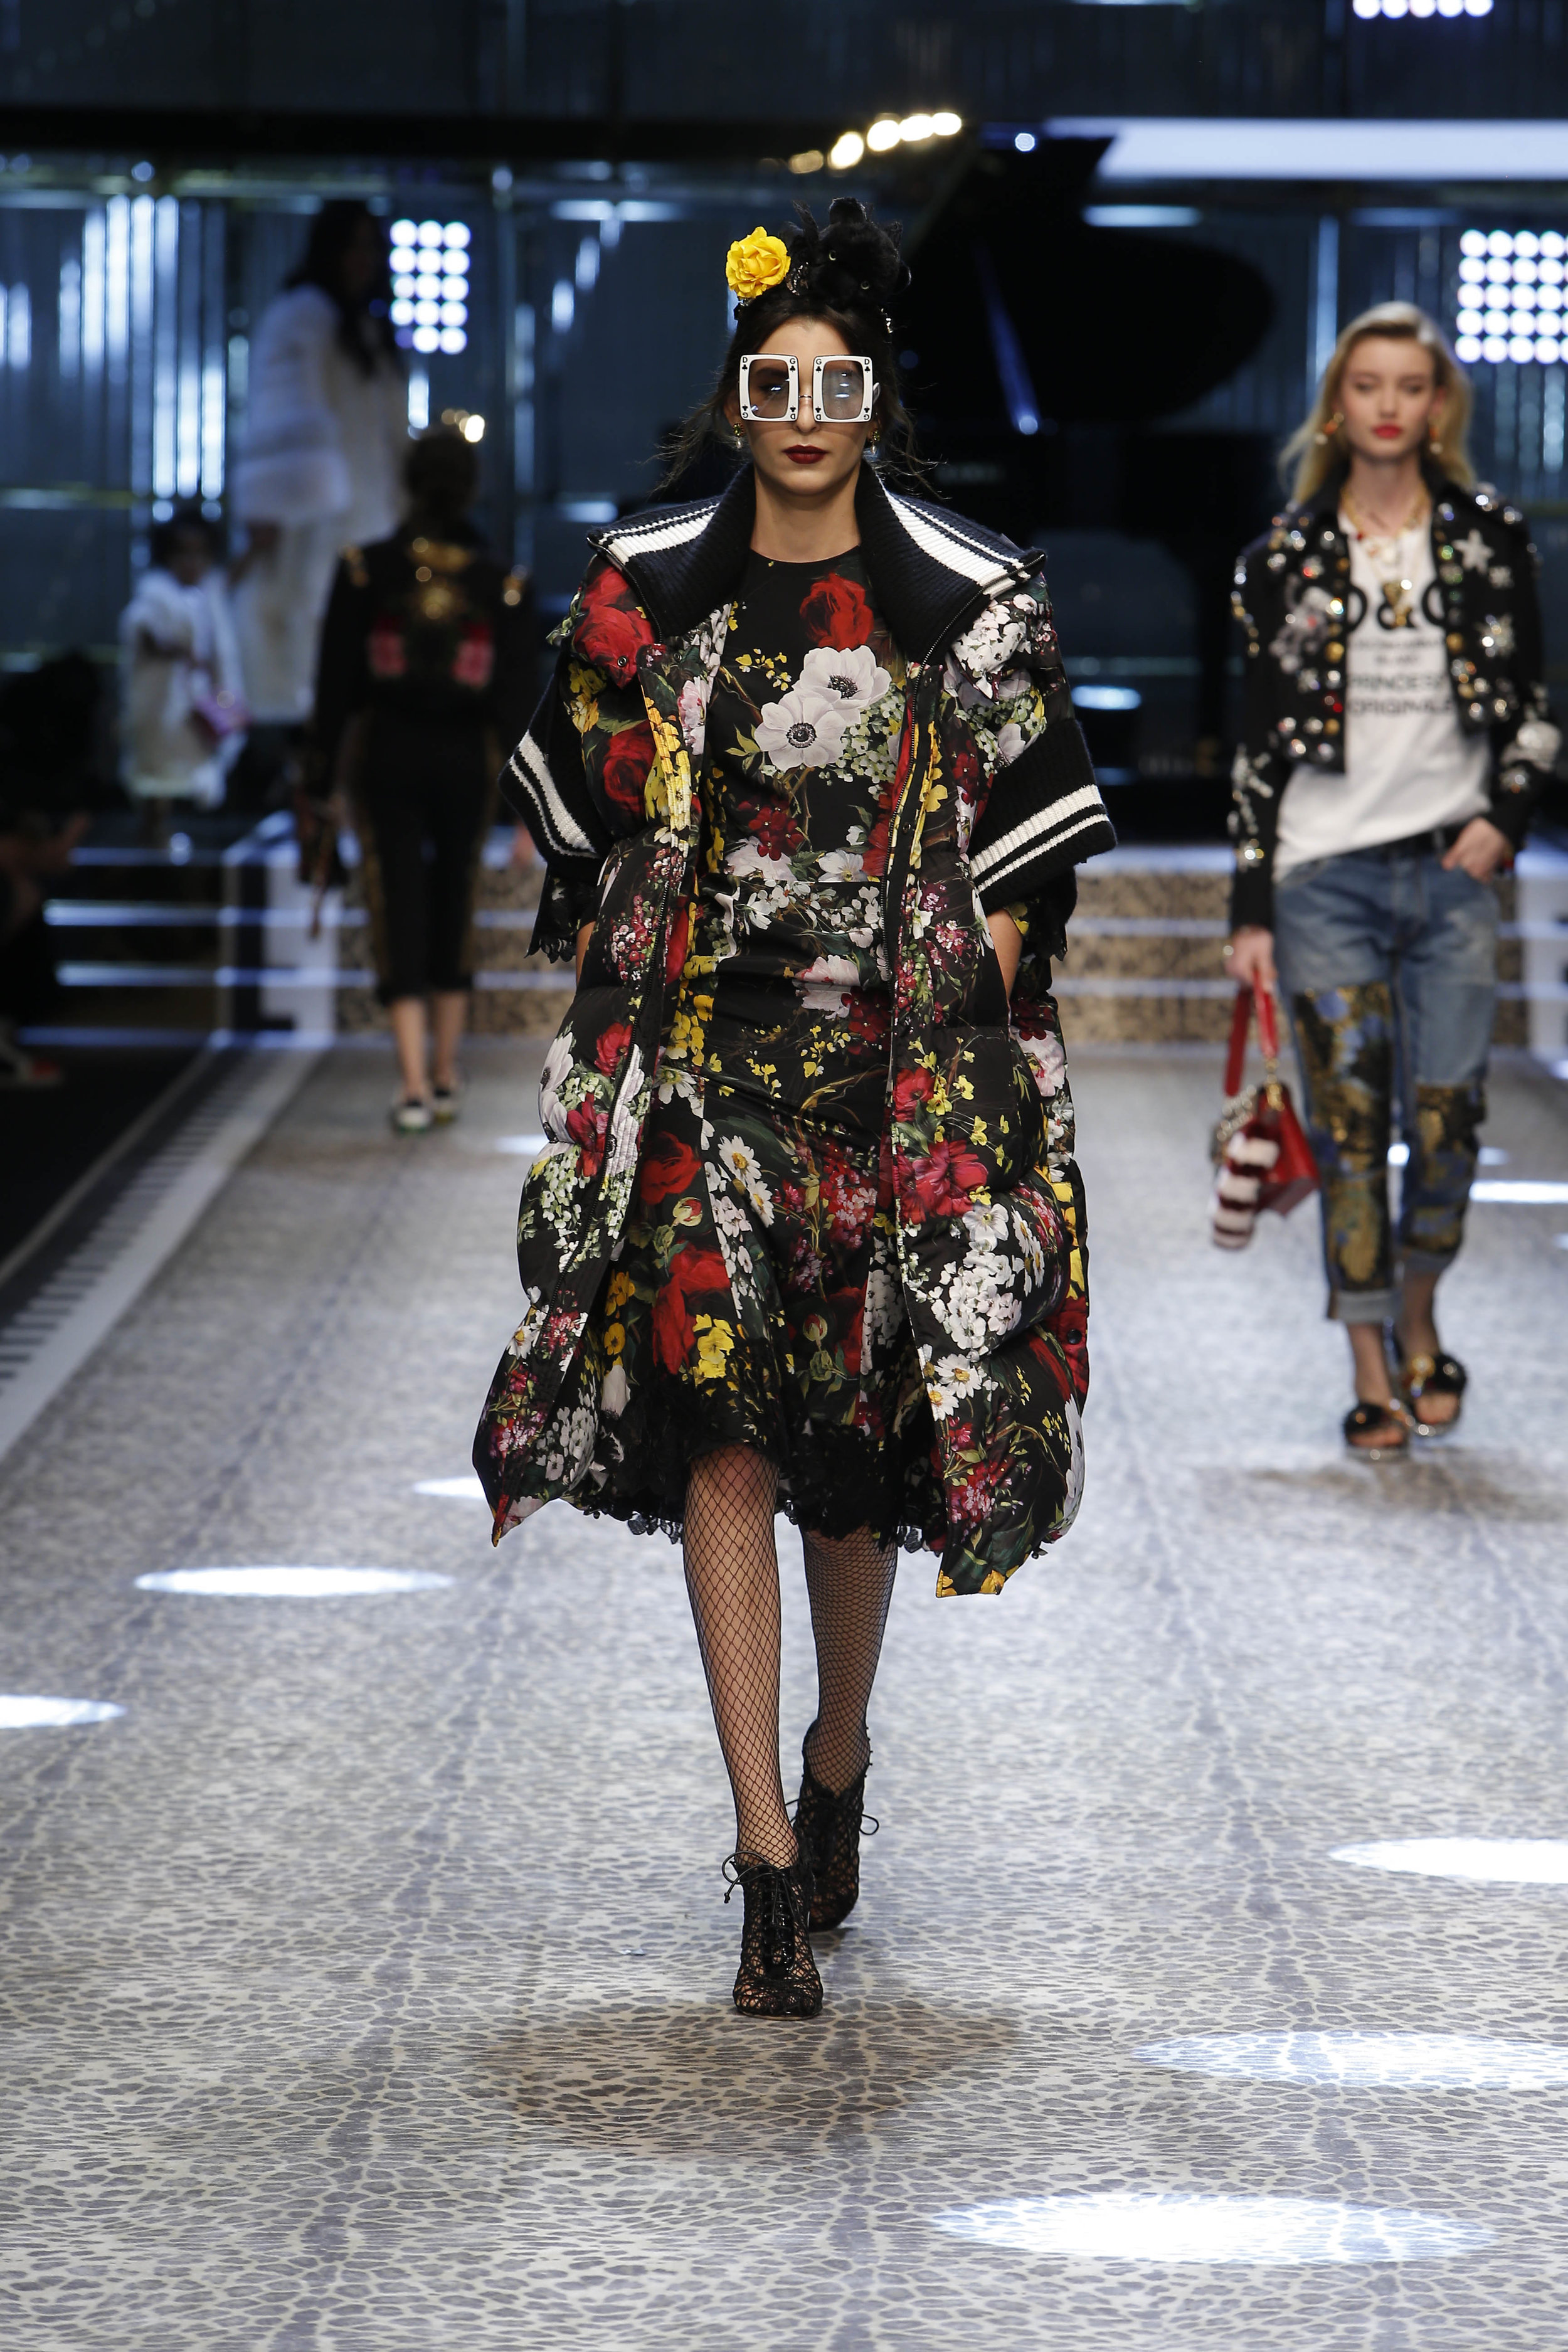 Dolce&Gabbana_women's fashion show fw17-18_Runway_images (51).jpg